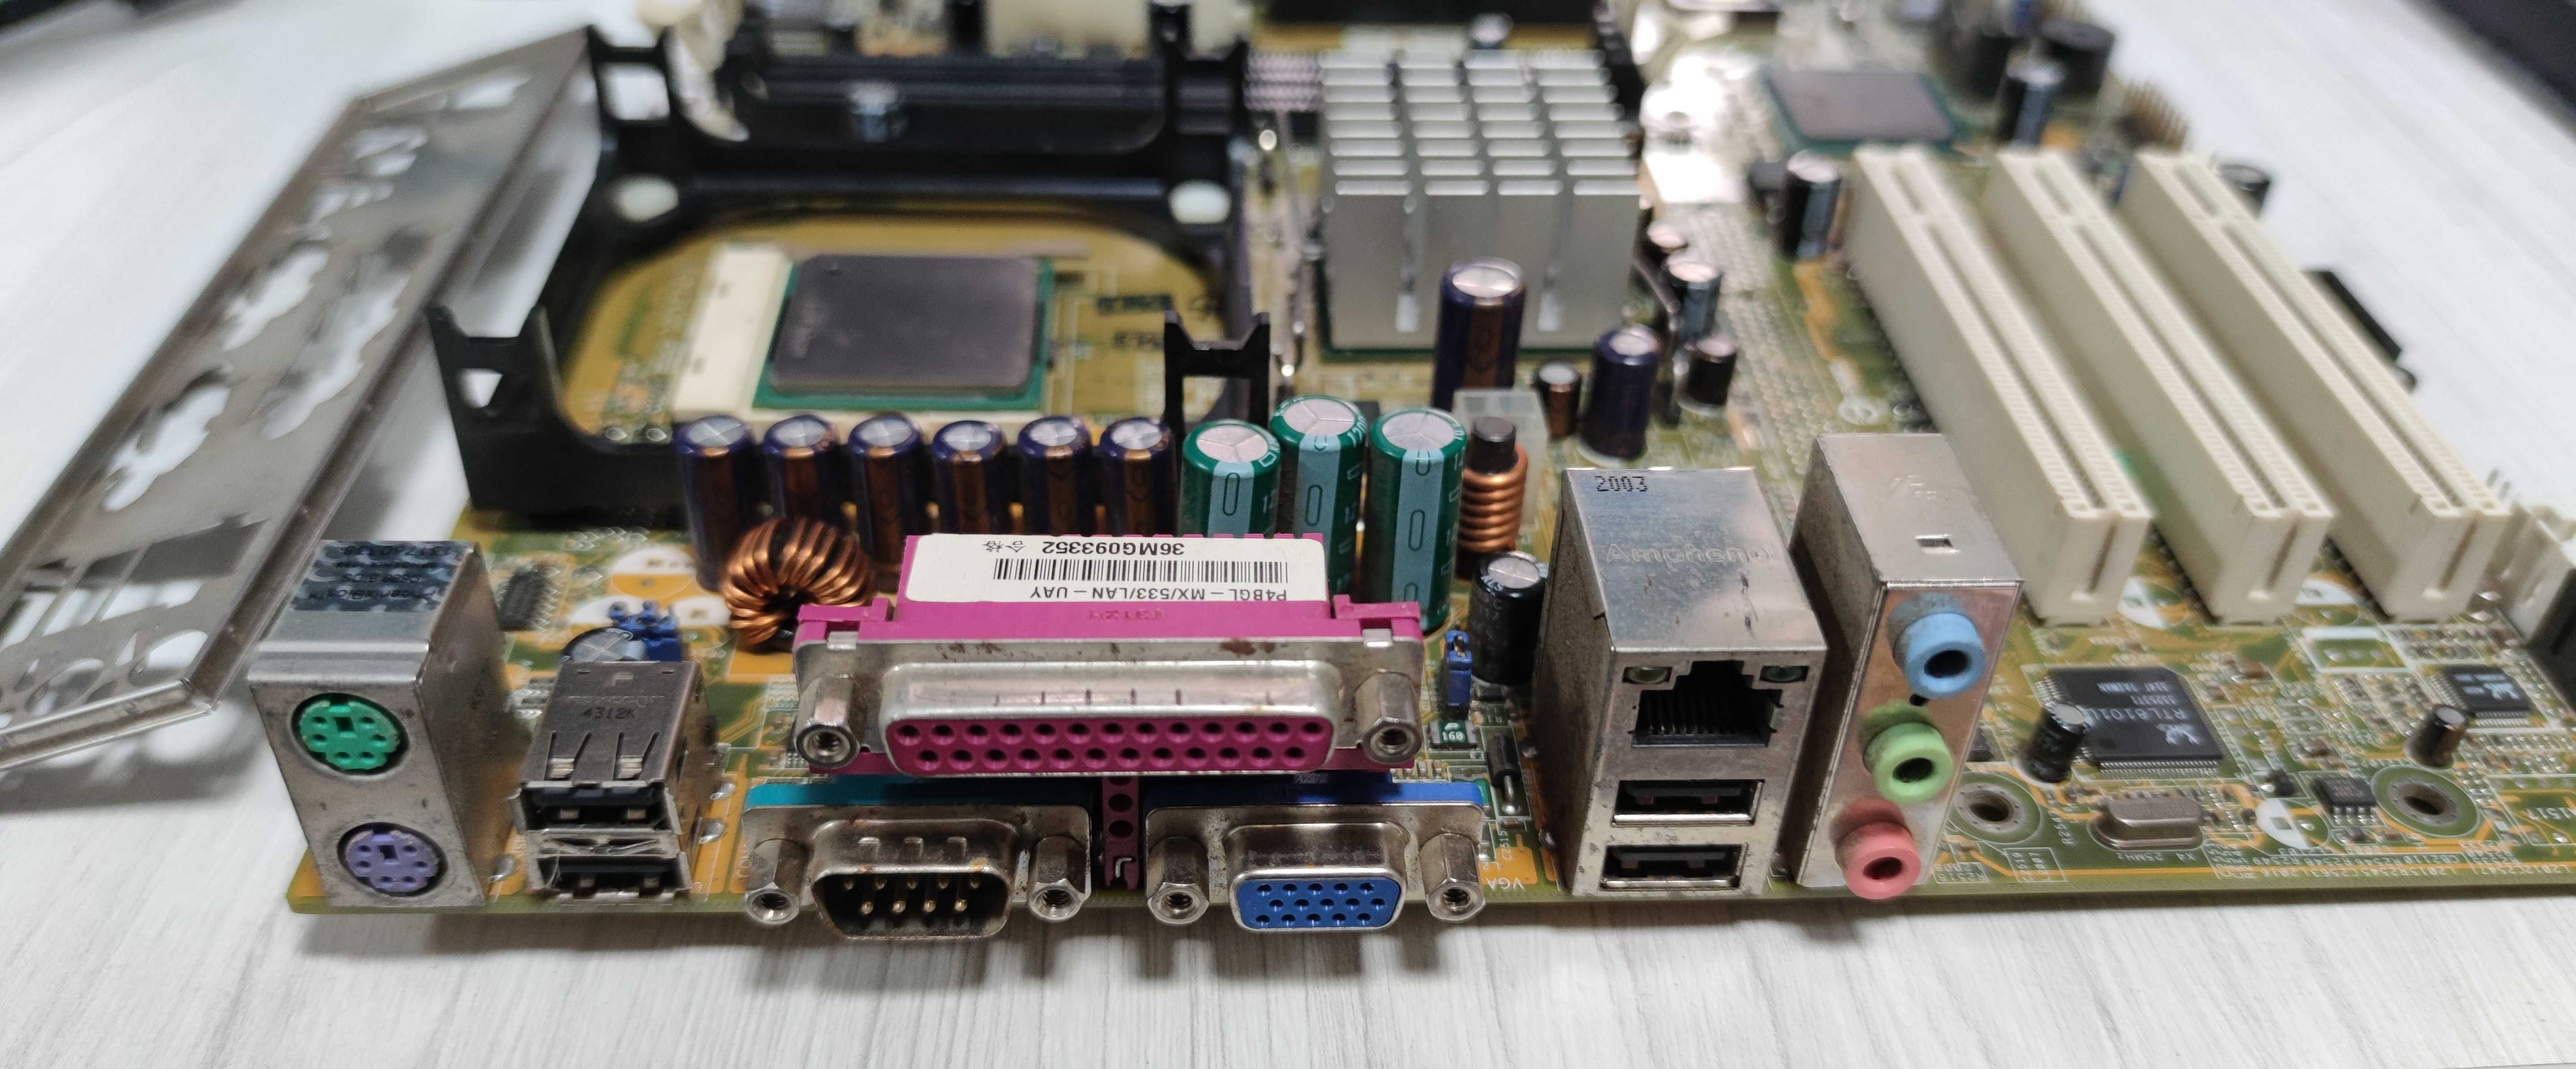 Материнська плата - Asus P4BGL-MX rev 2.0 + CPU Intel Celeron 2.0 GHz